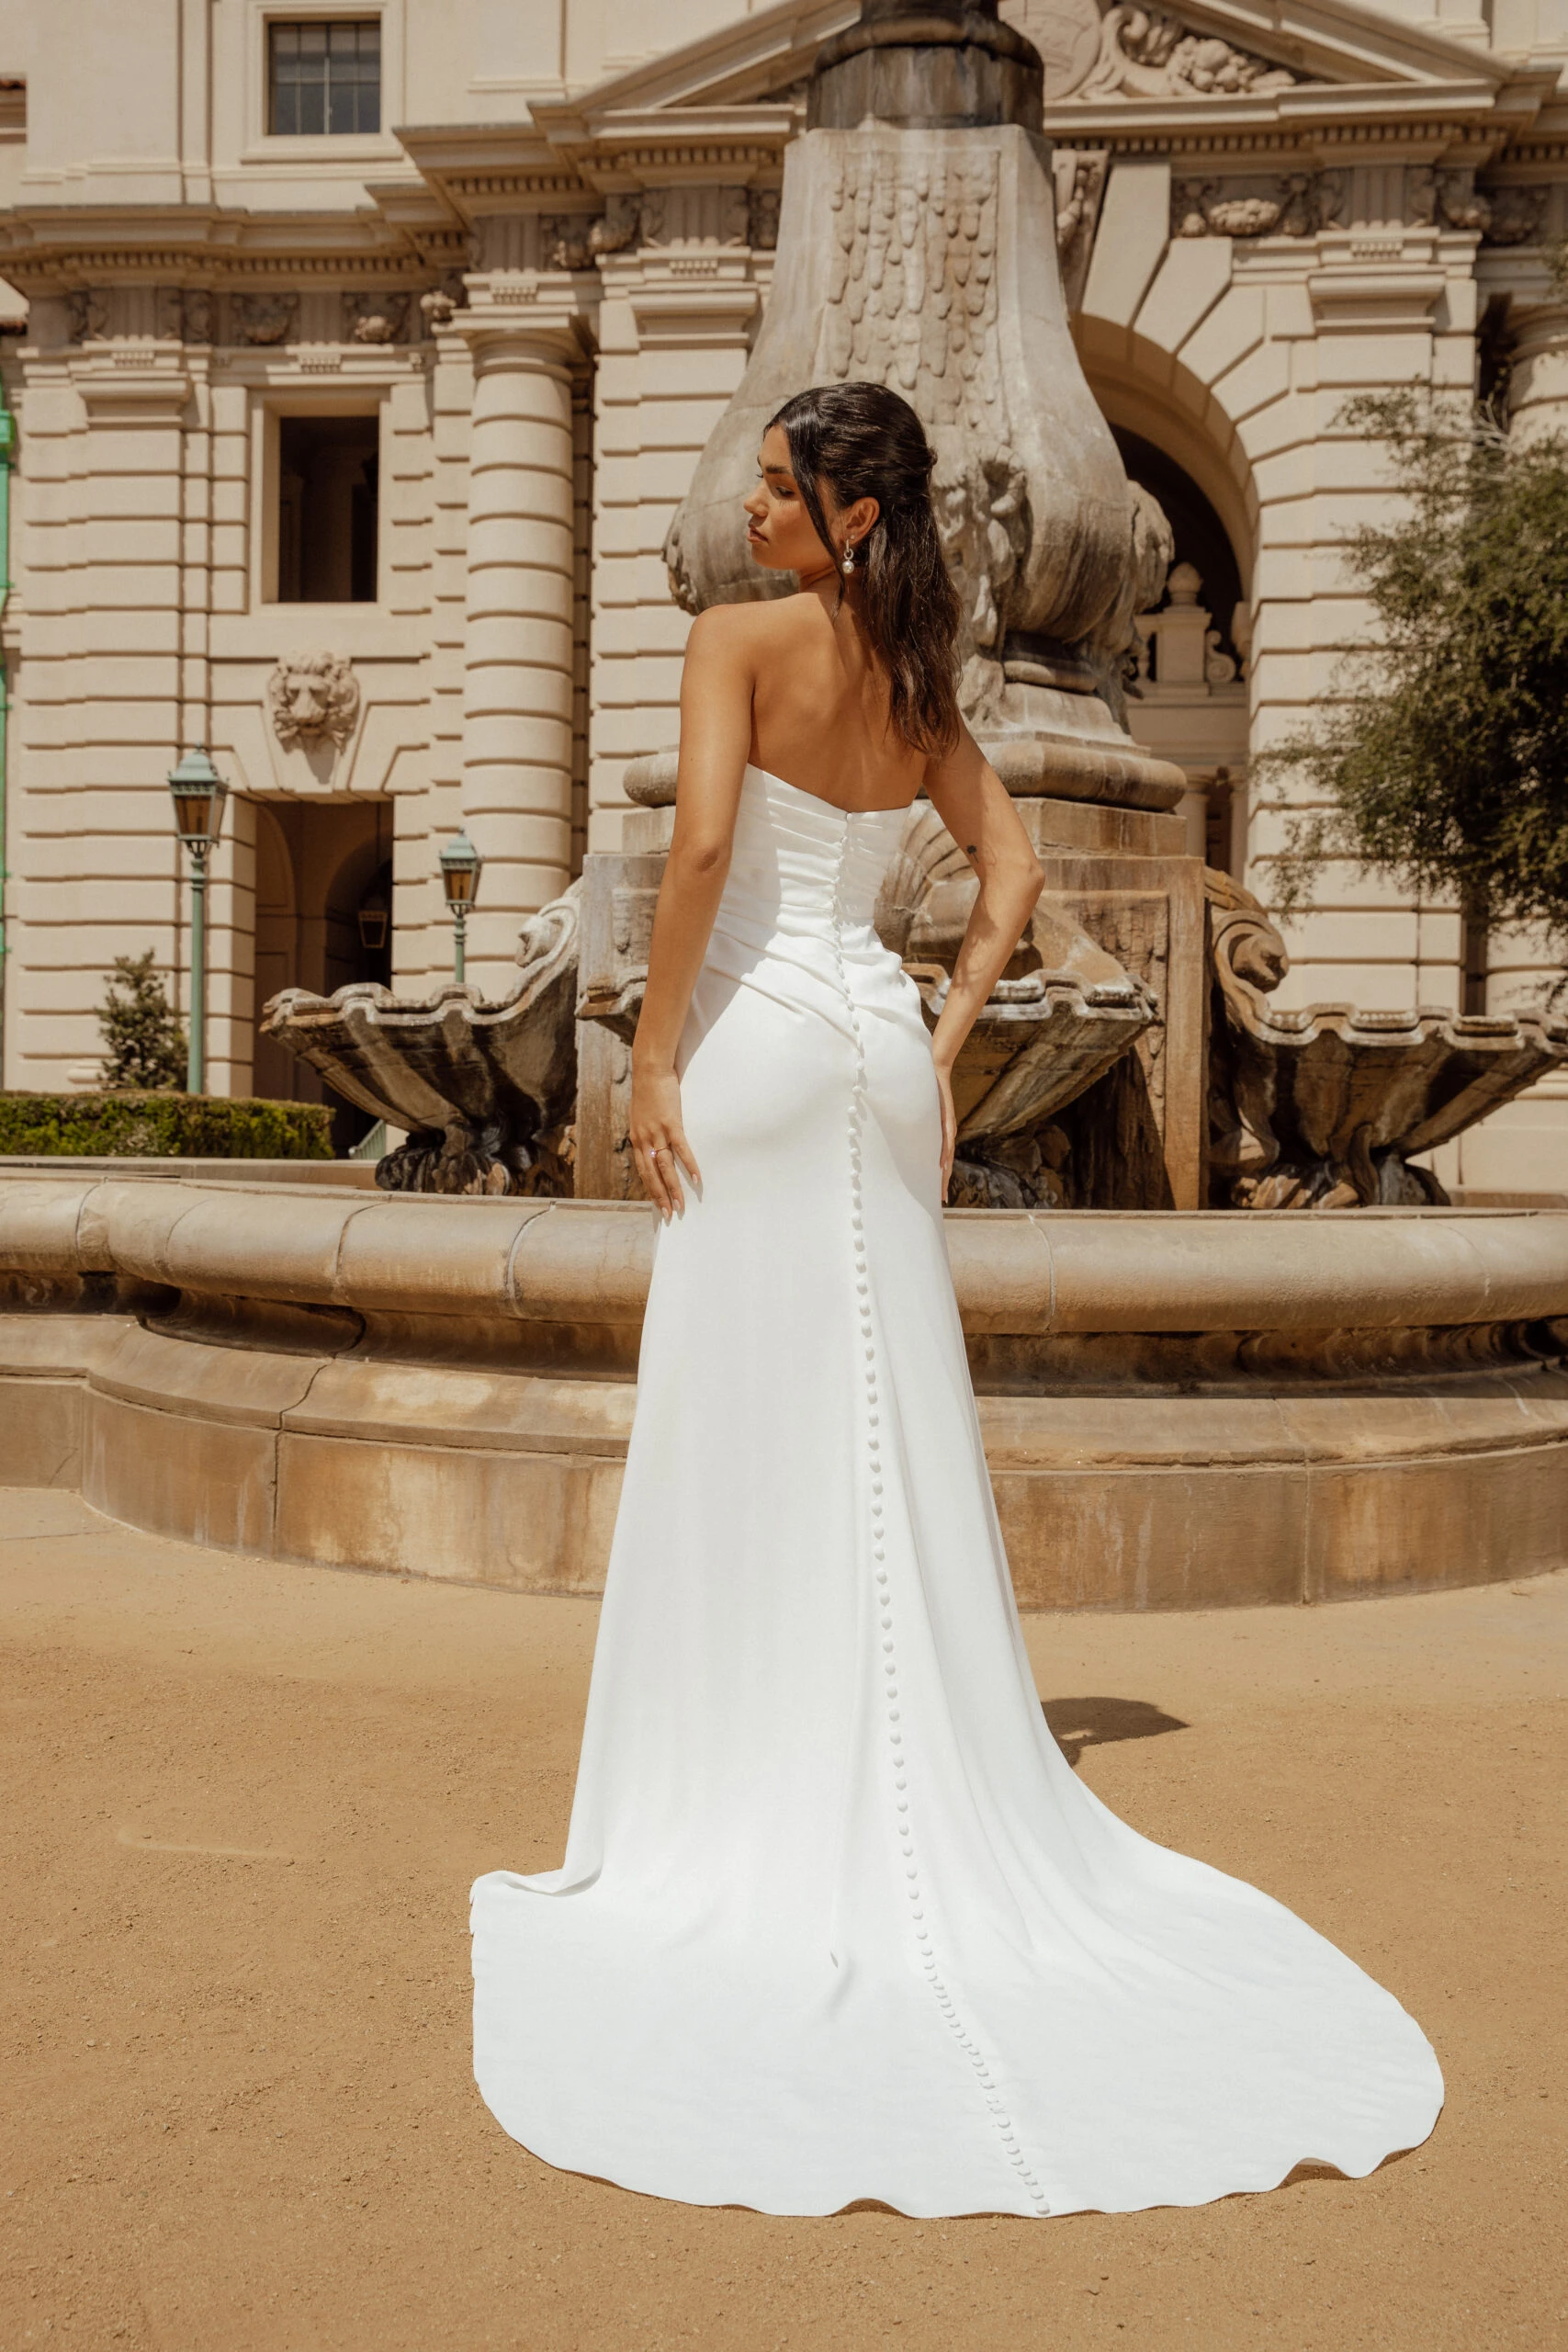 simple strapless column wedding dress with button details - D3634 by Essense of Australia